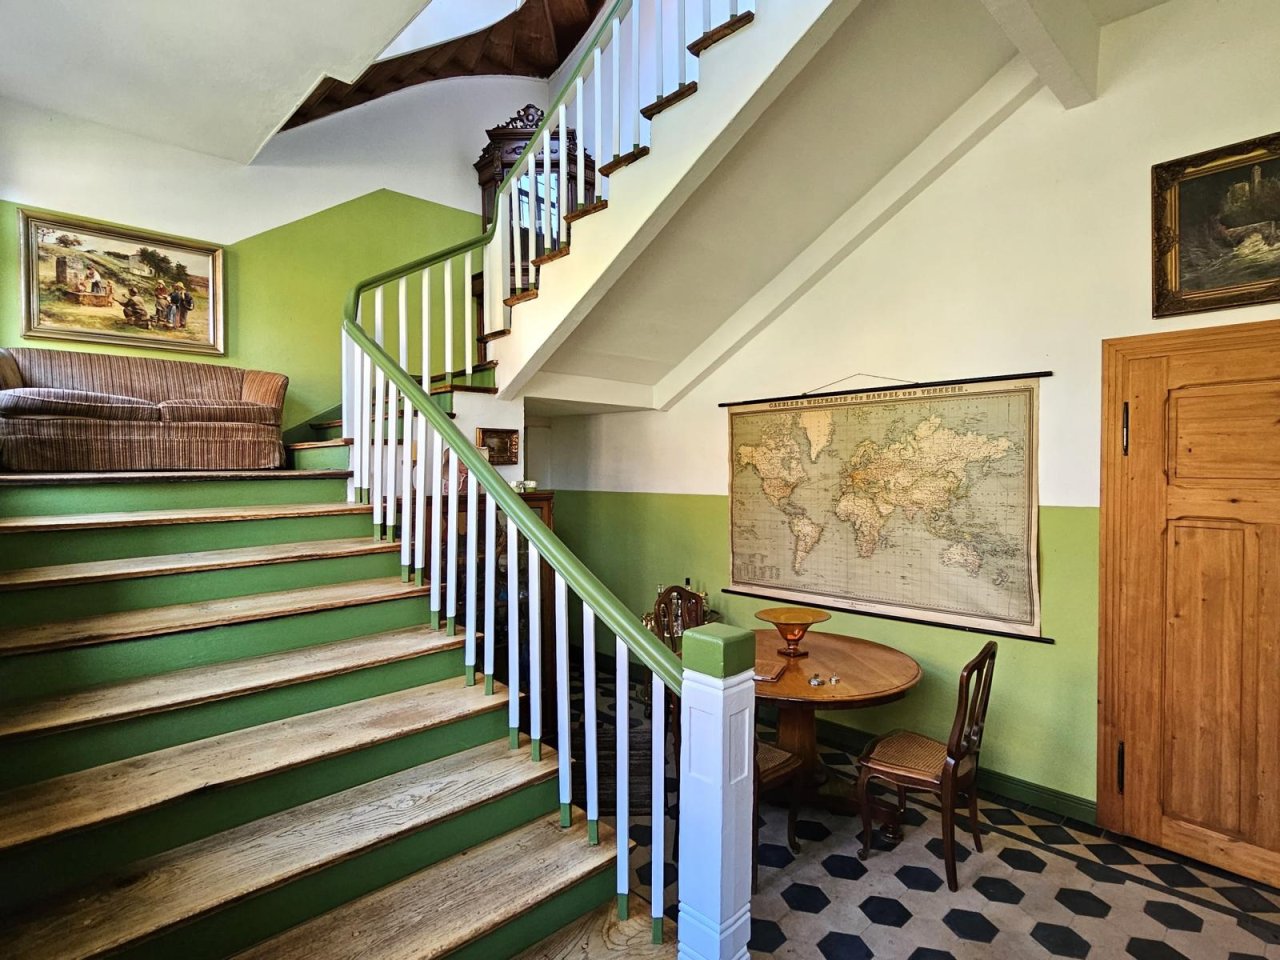 Malerisches Treppenhaus